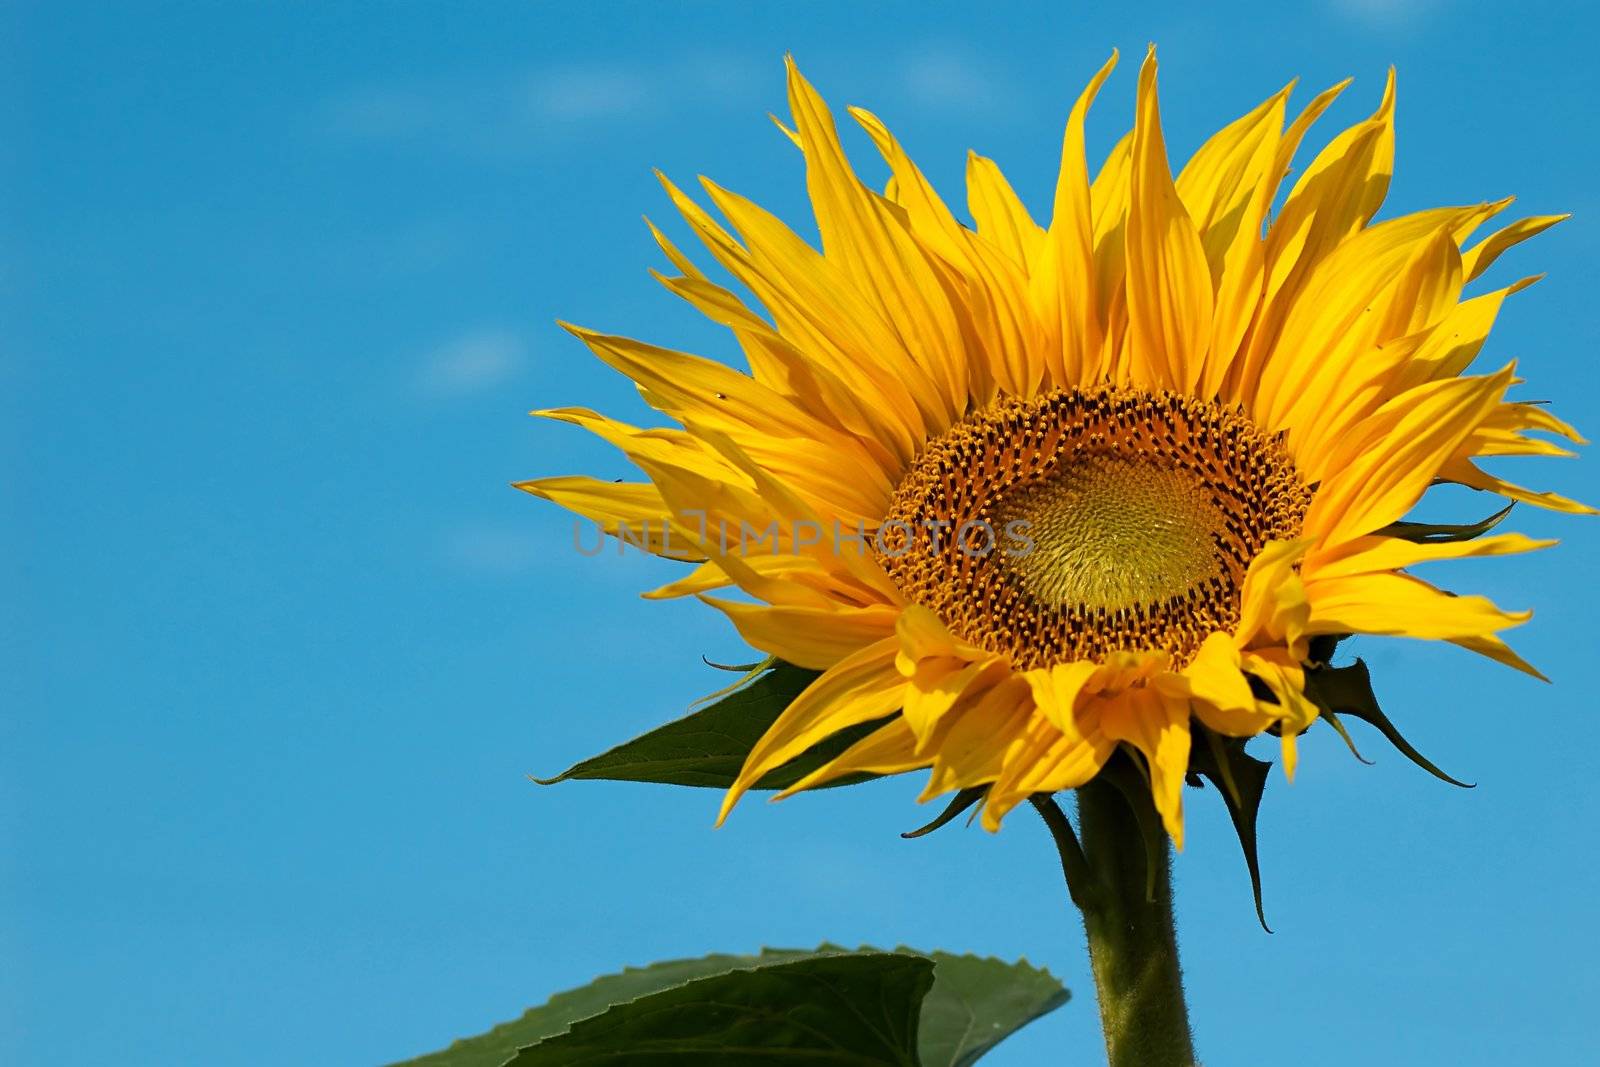 Sunflower close-up ON BACKGROUND by velkol